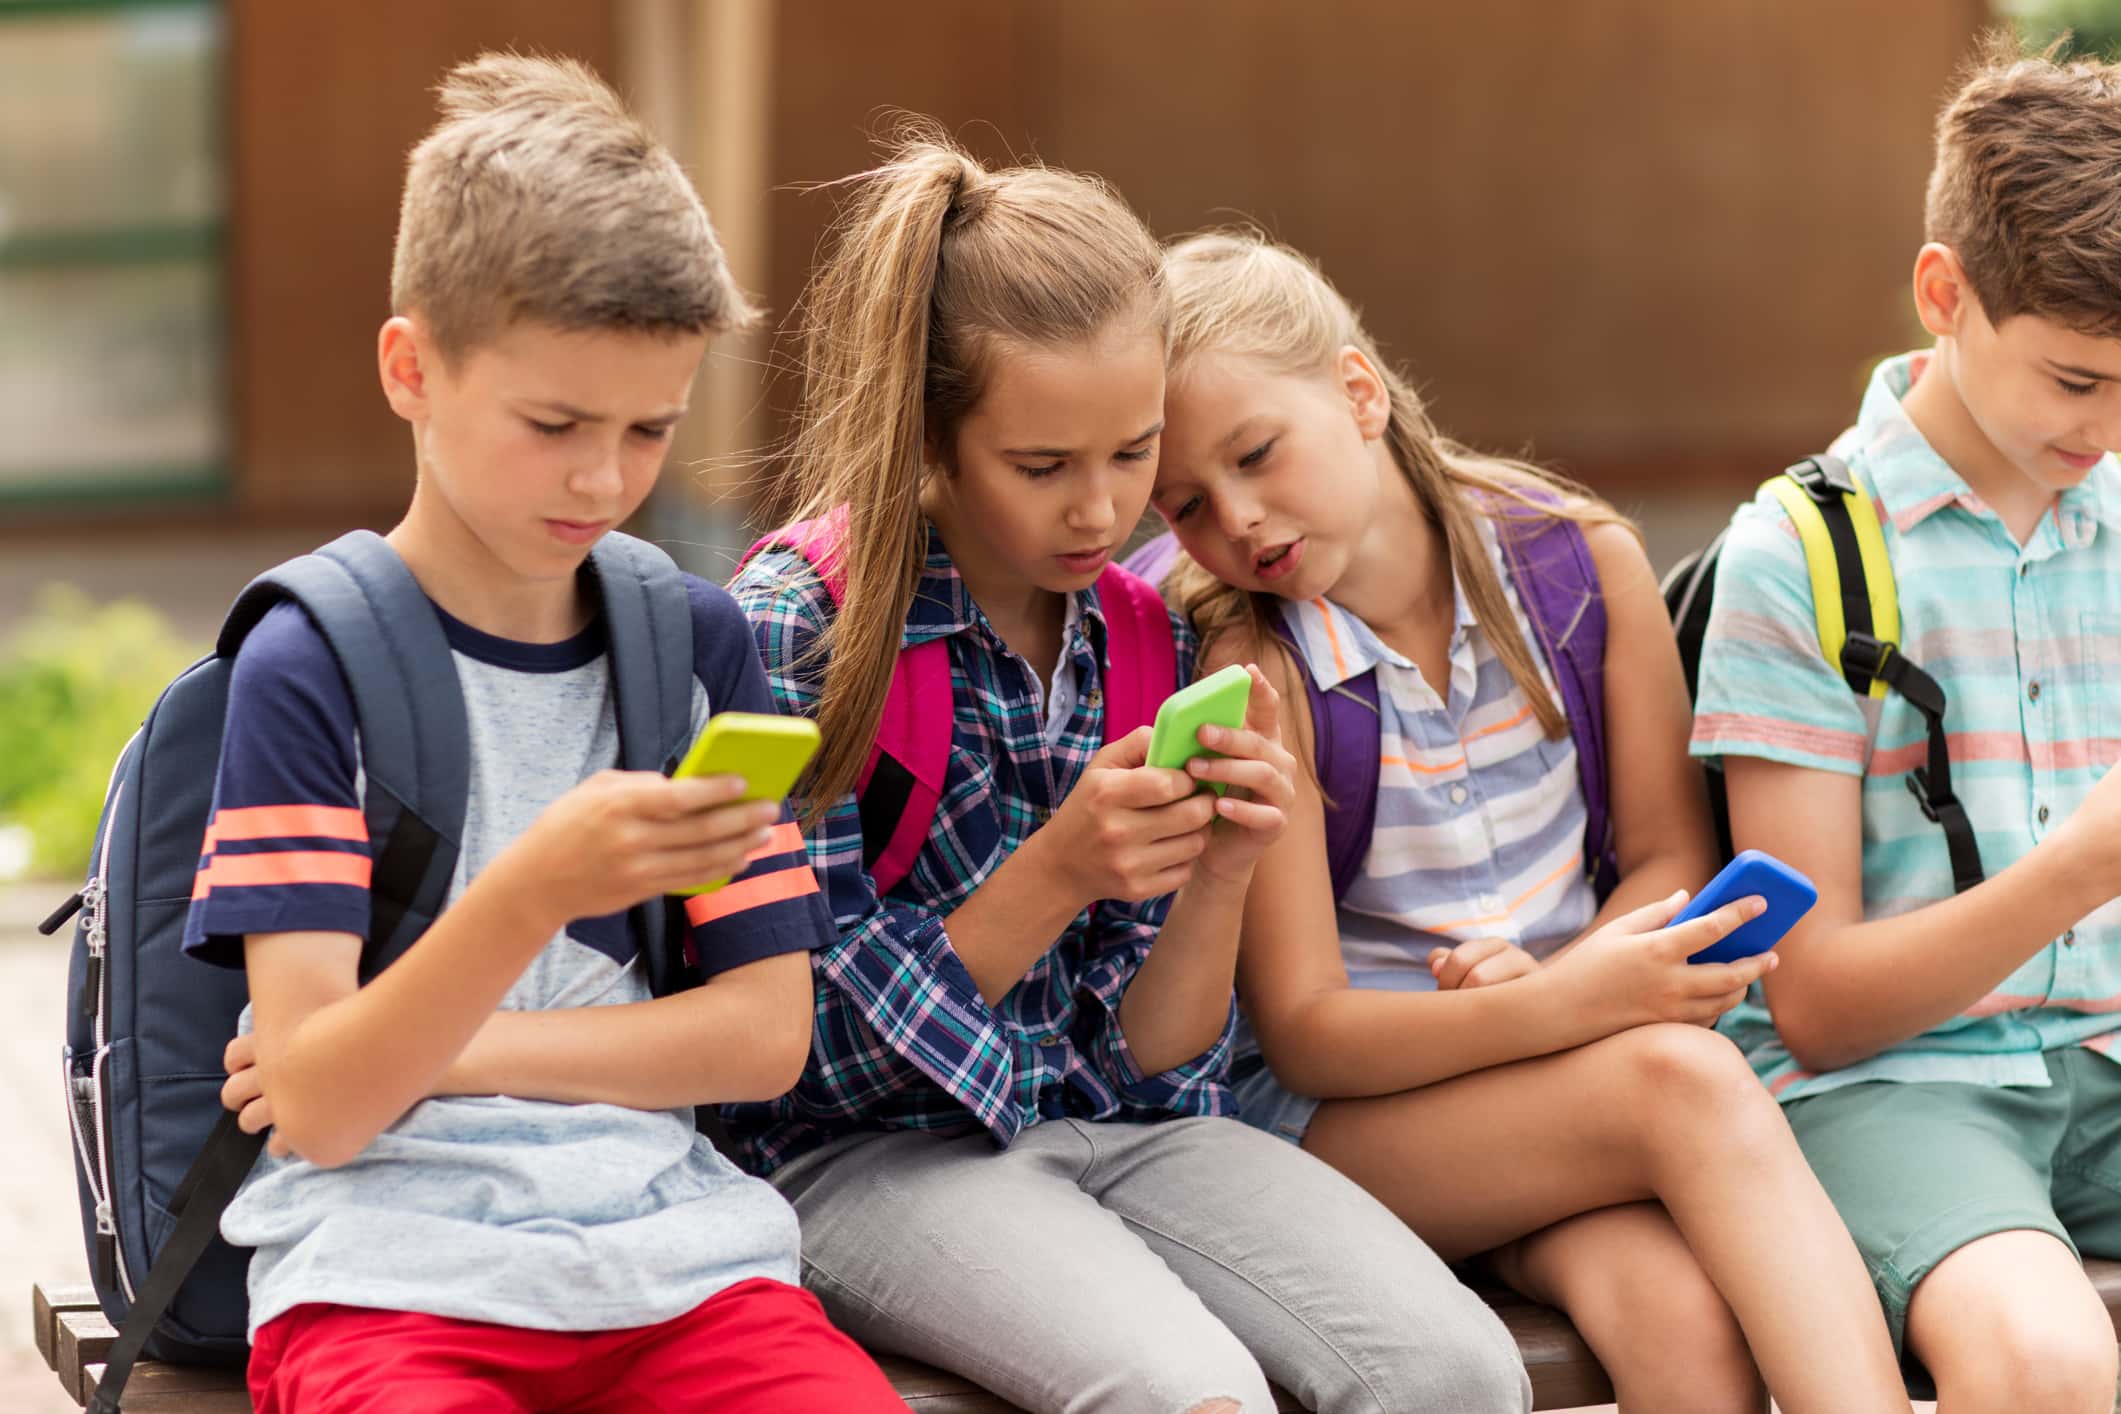 Children internet and phone addiction